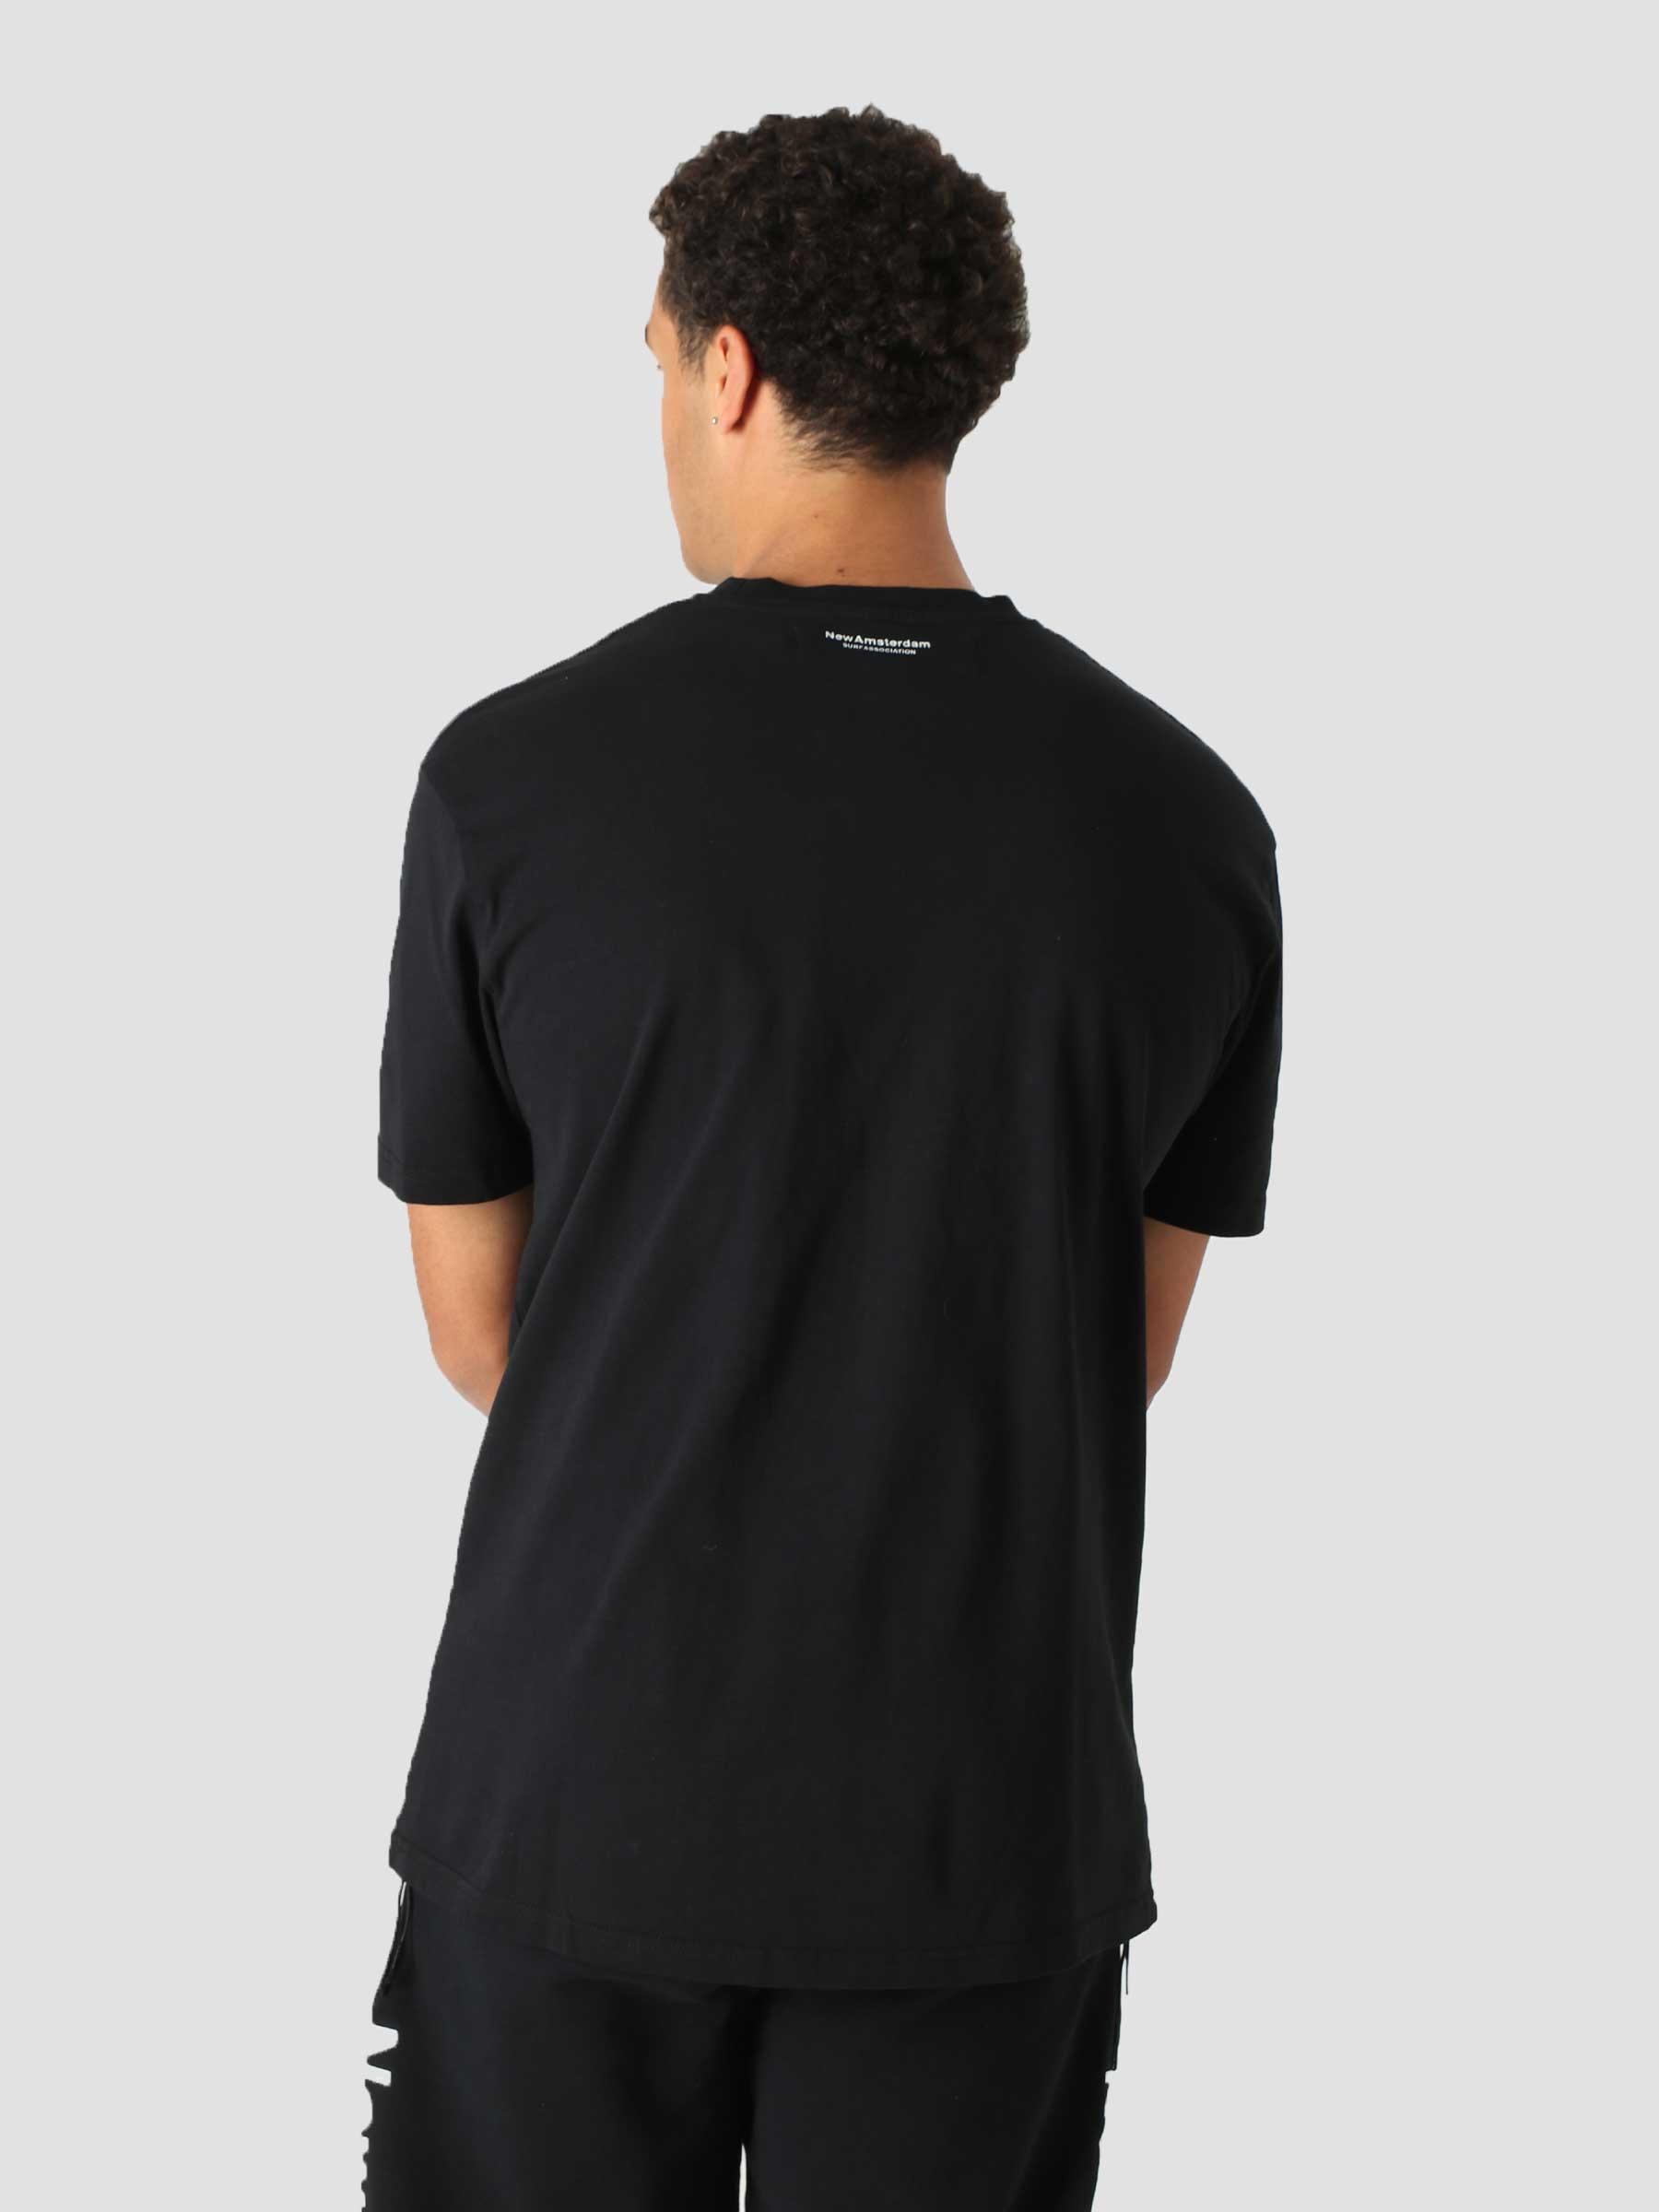 Dice T-Shirt Black 2021201